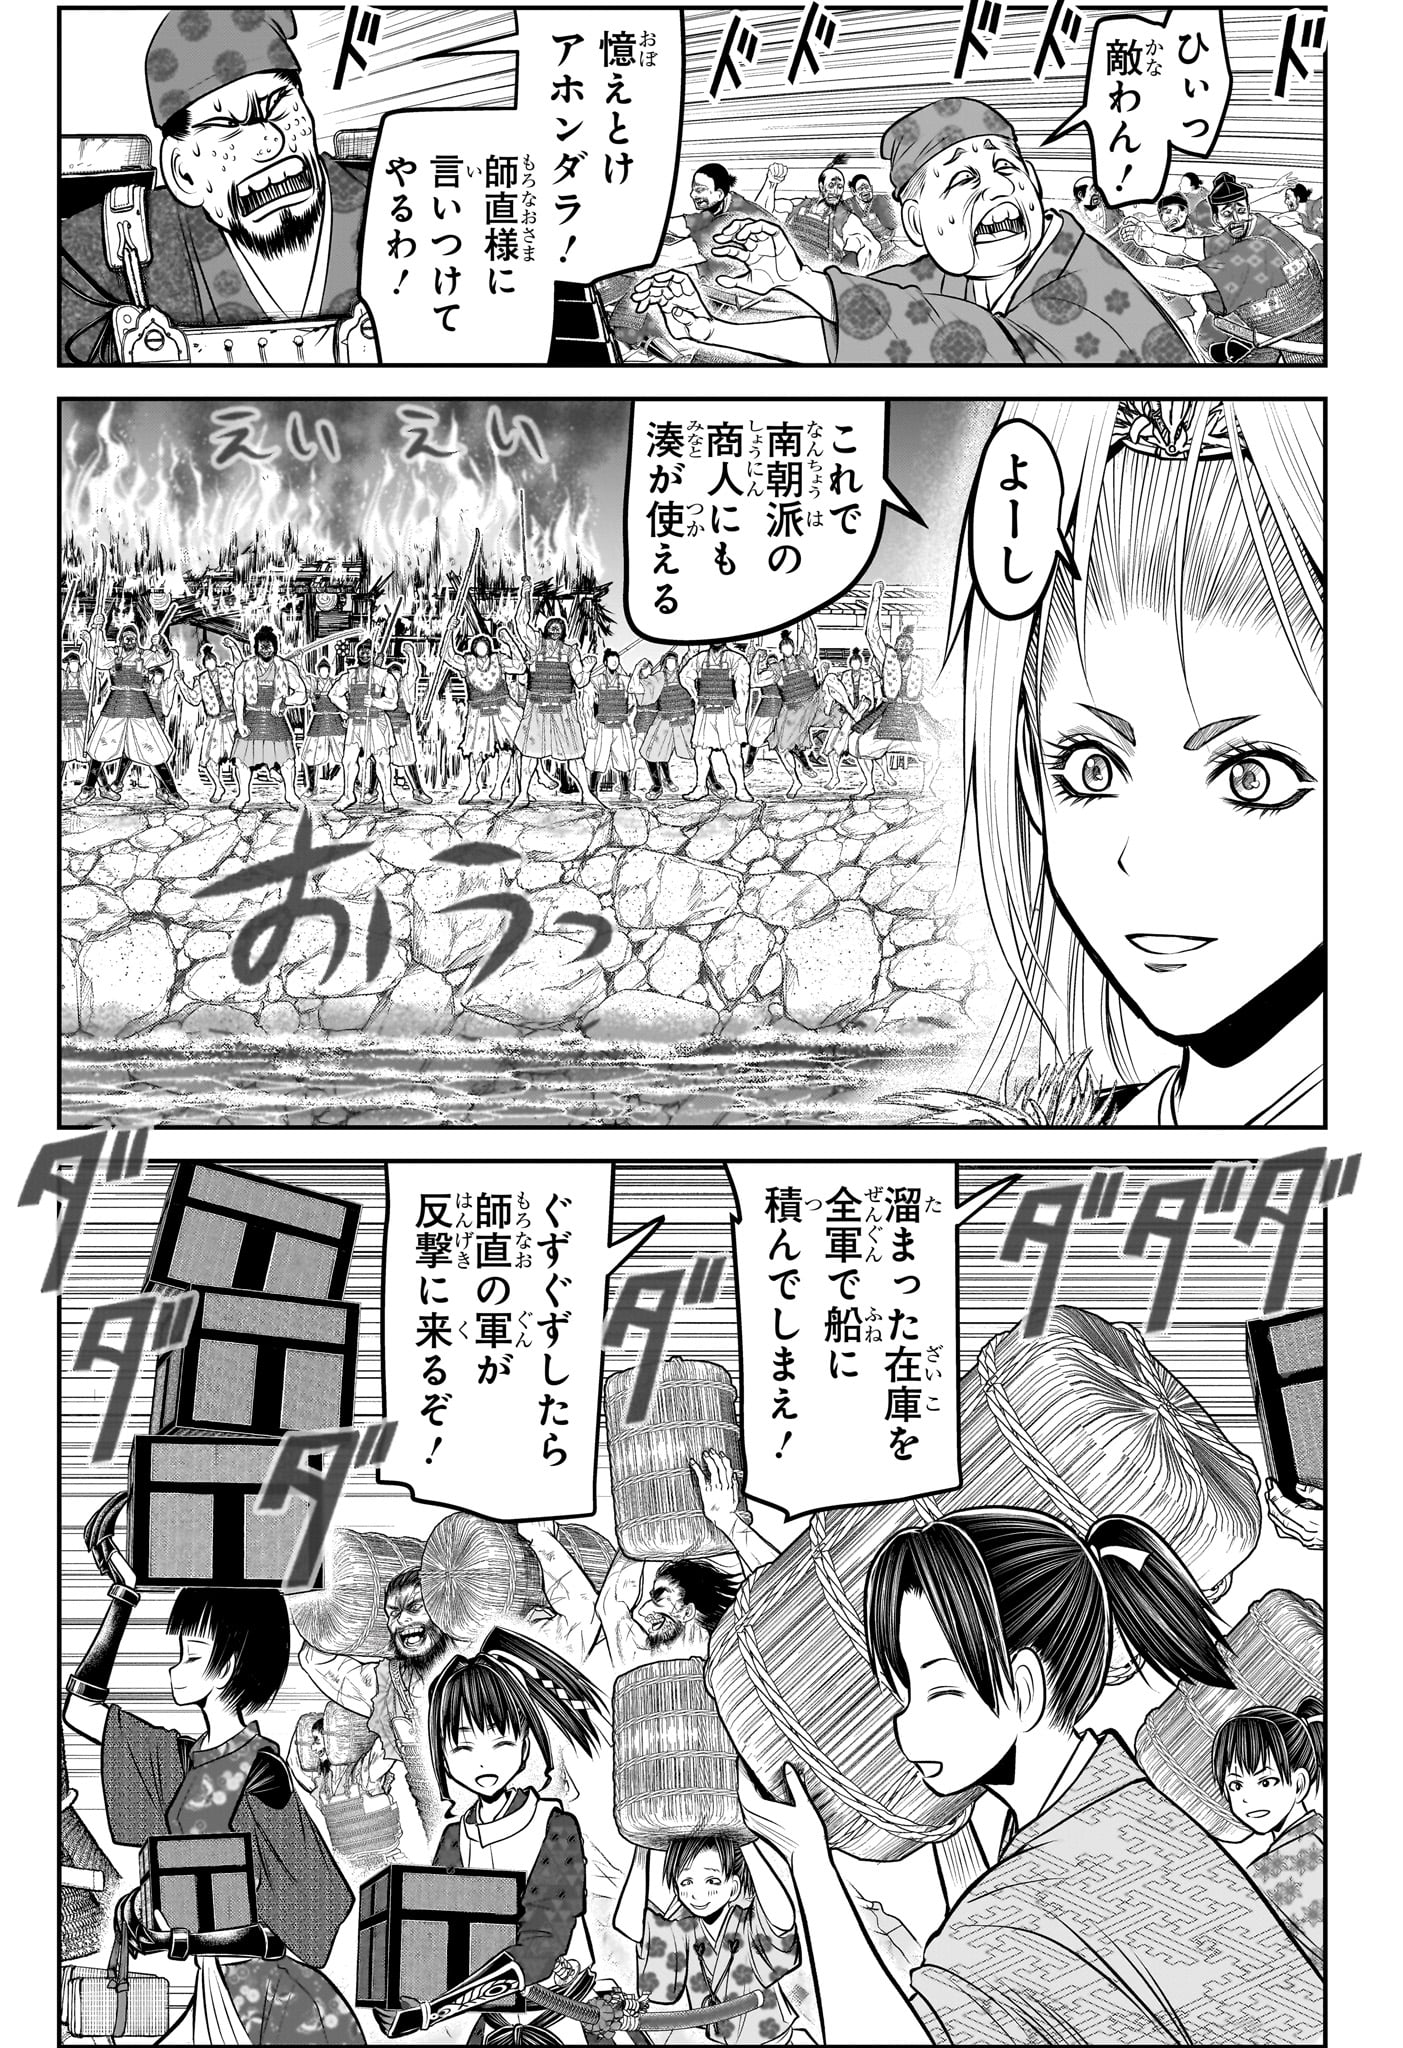 Nige Jouzu no Wakagimi - Chapter 156 - Page 3